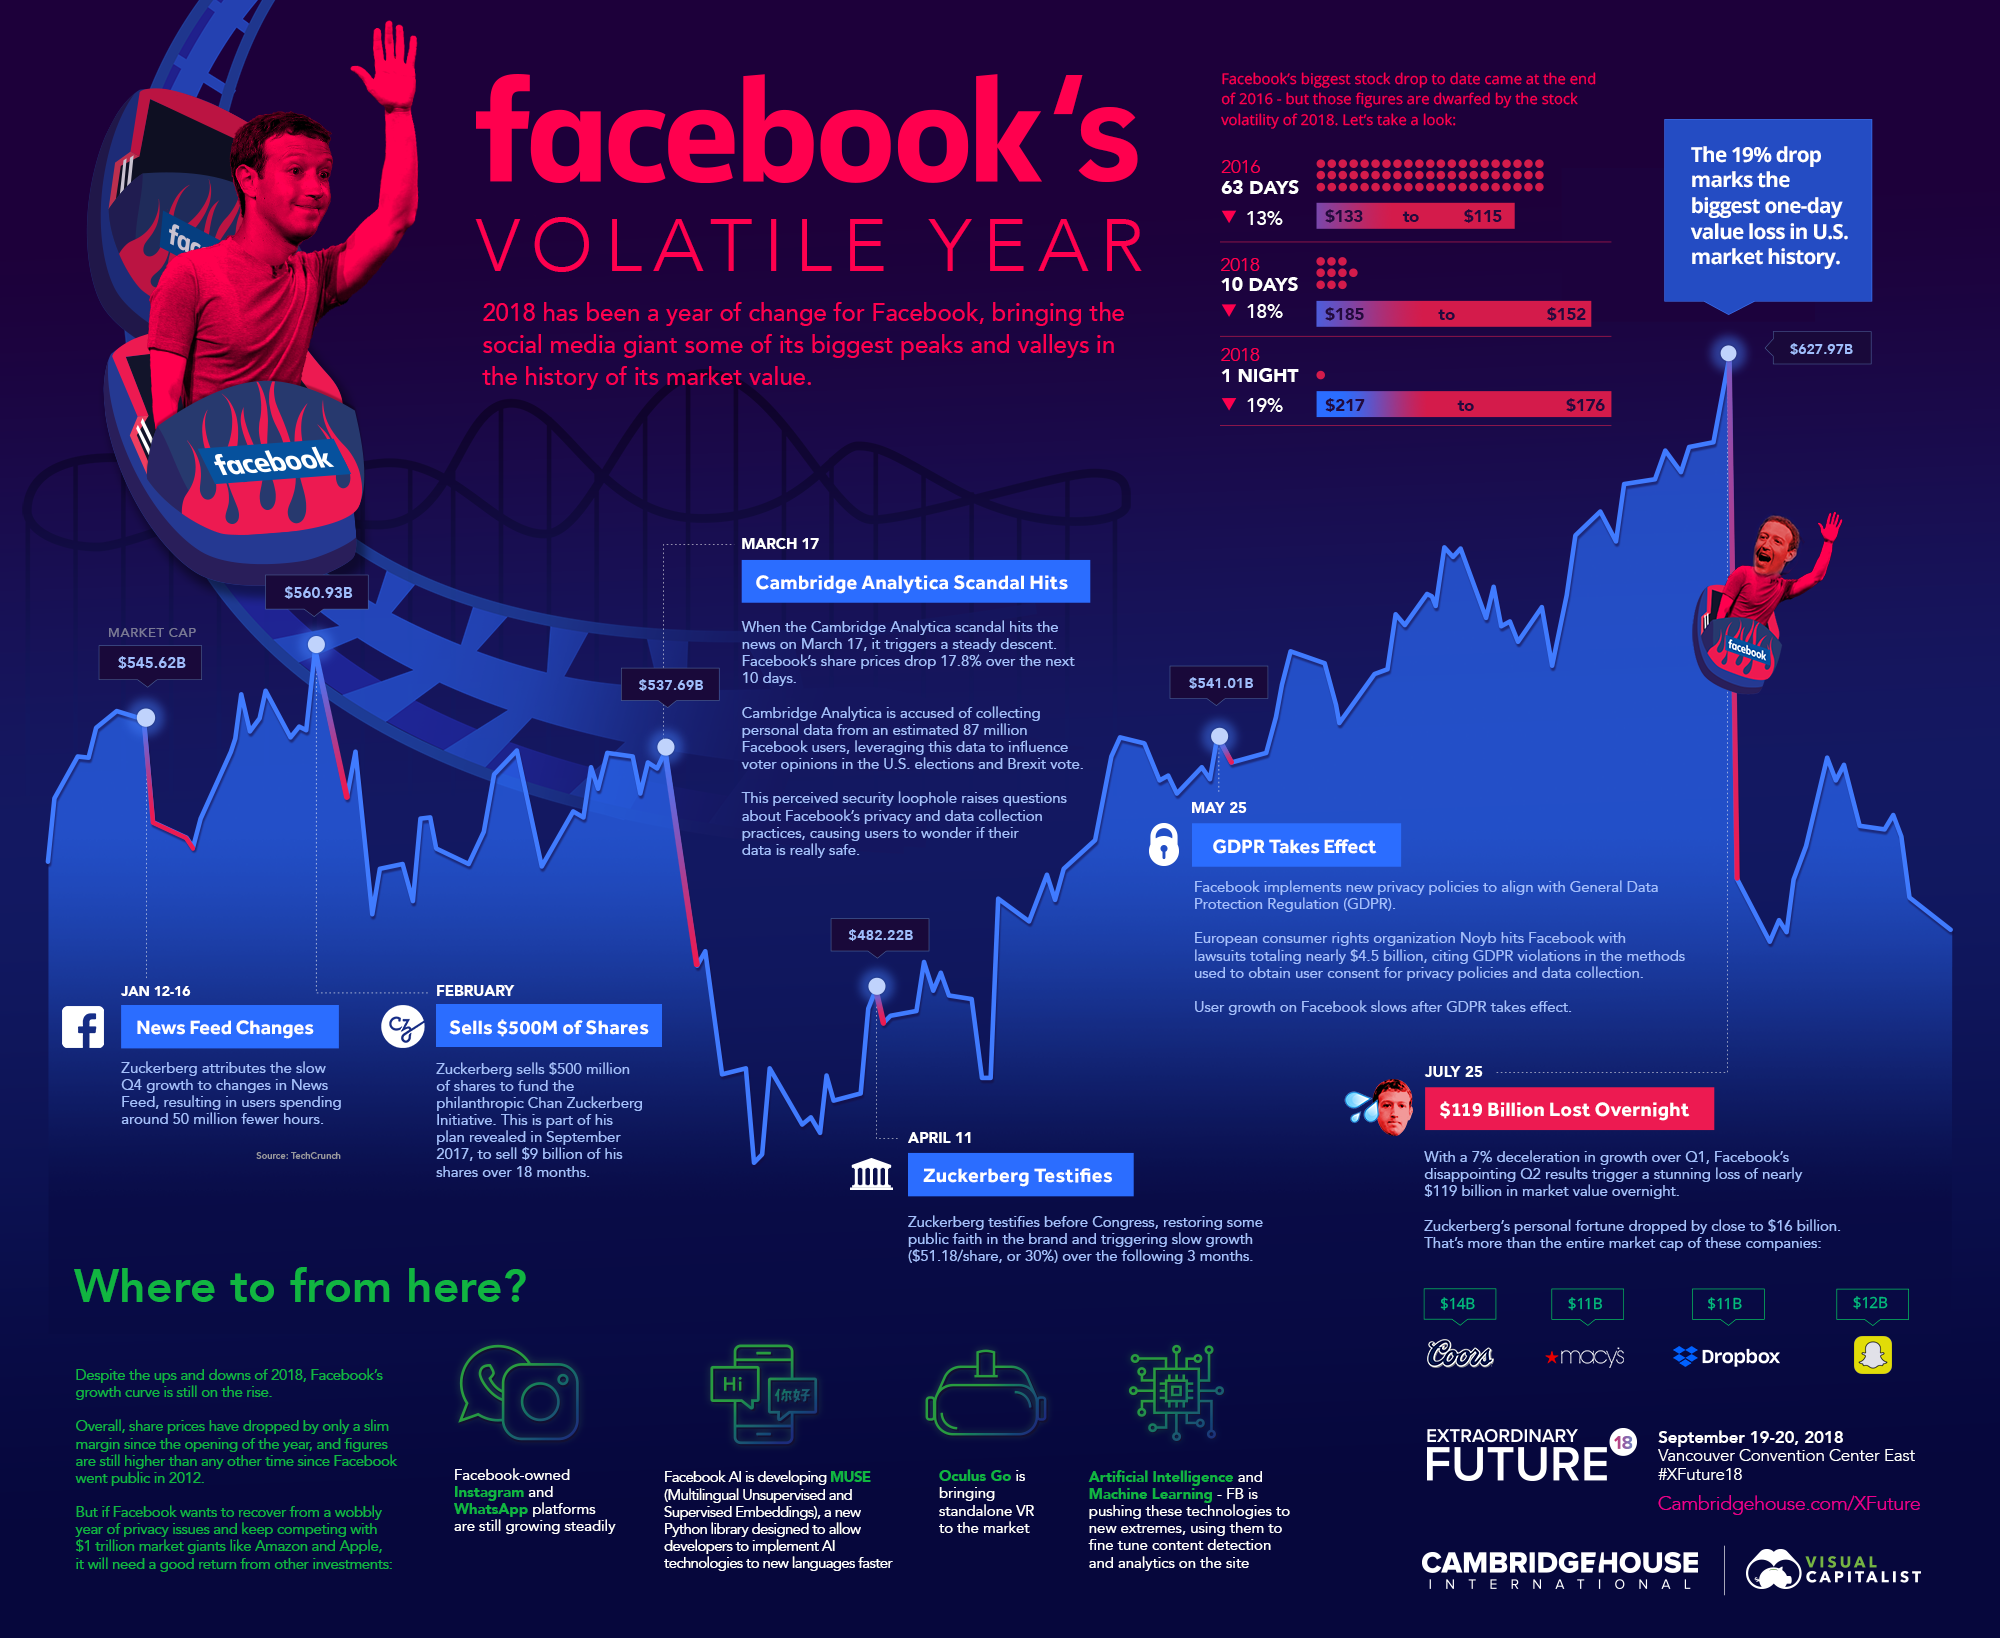 Visualizing Facebook's Volatile Year